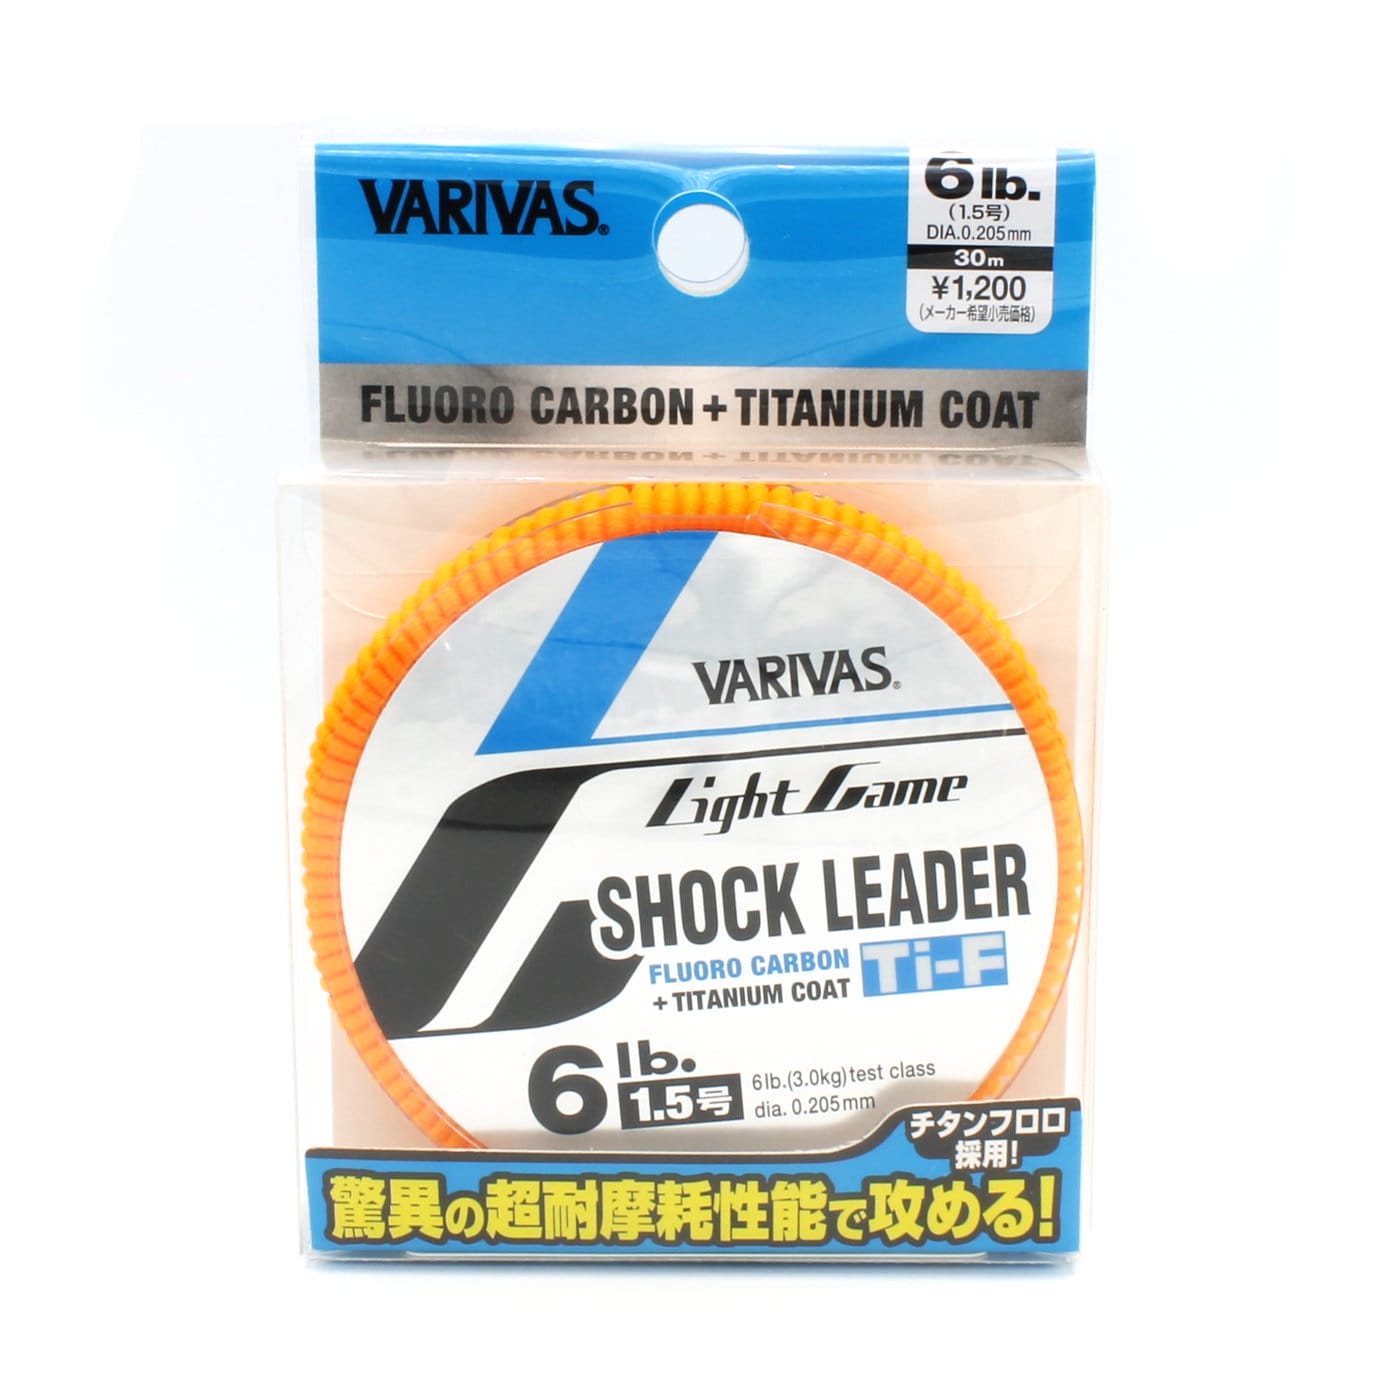 Trout Shock Leader Ti-F Fluorocarbon – VARIVAS